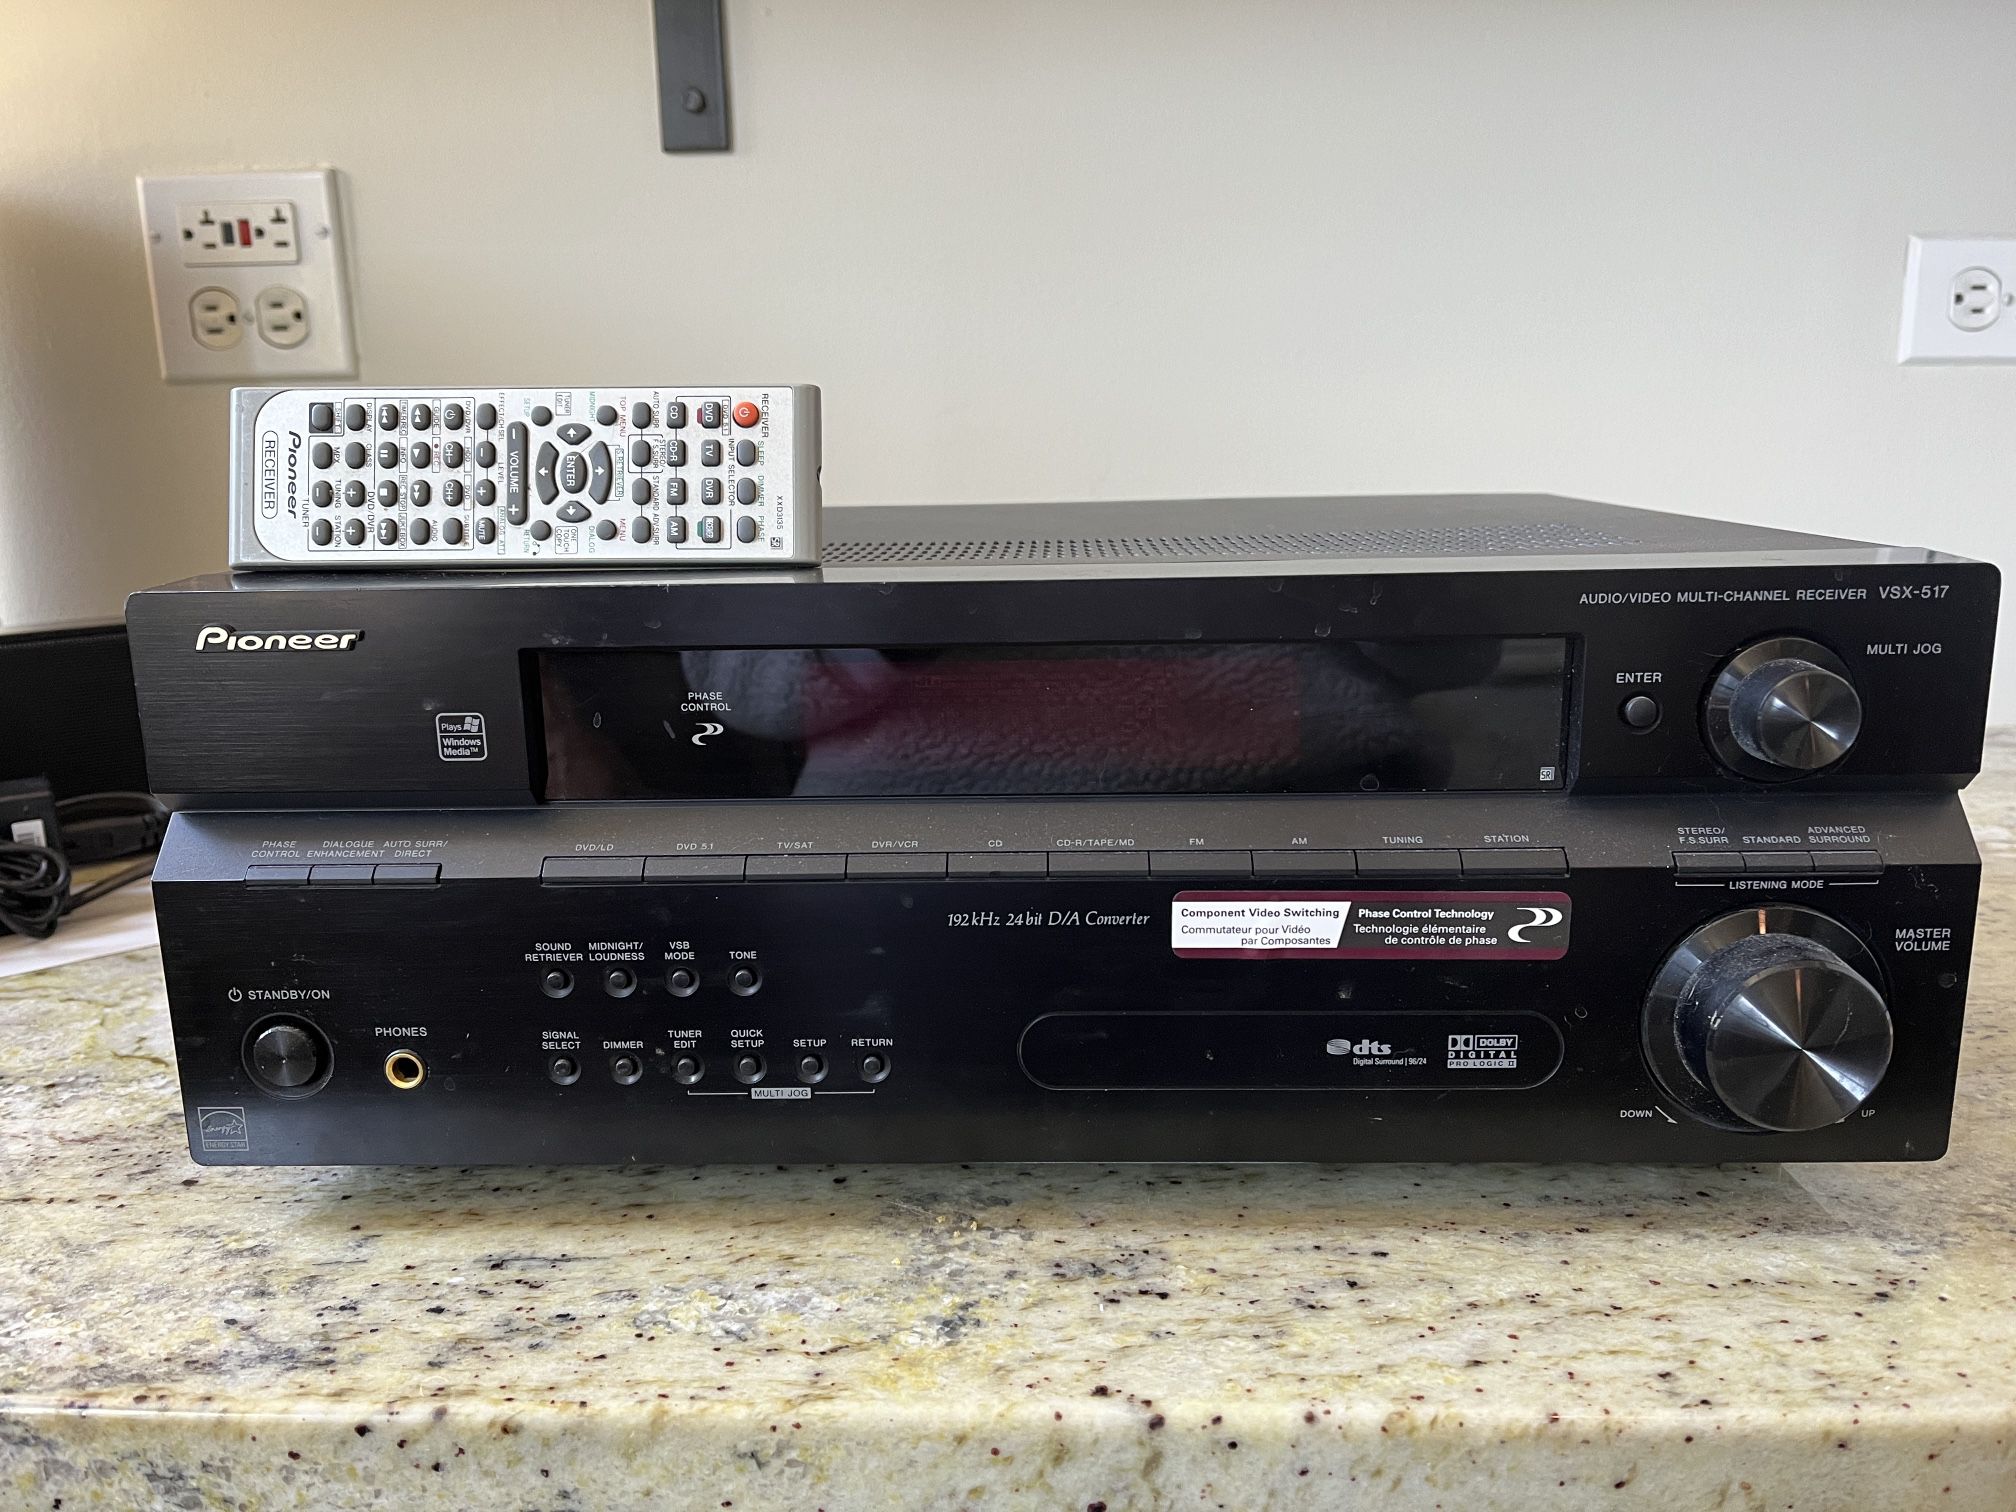 VSX-517 audio / video multichannel receiver (remote included)